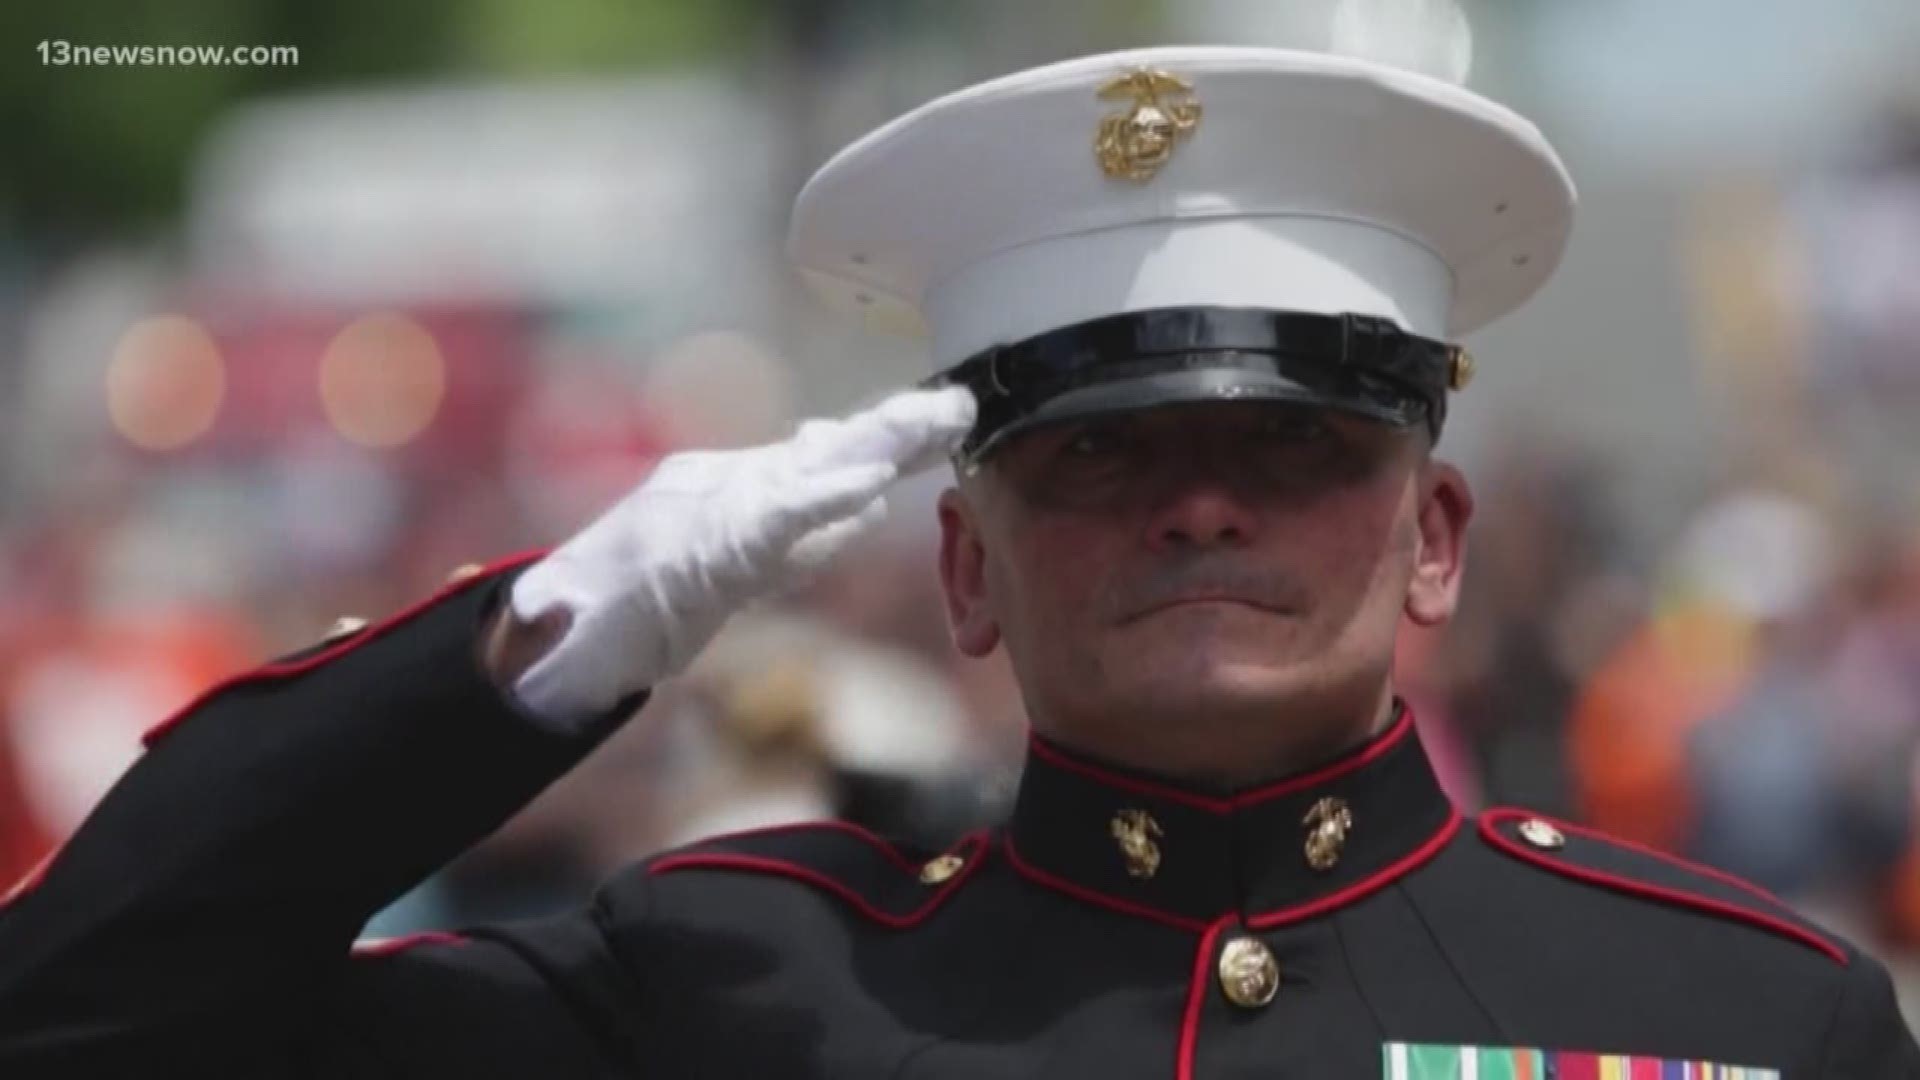 The Saluting Marine is coming to Hampton Roads as part of his Salute Across America tour.